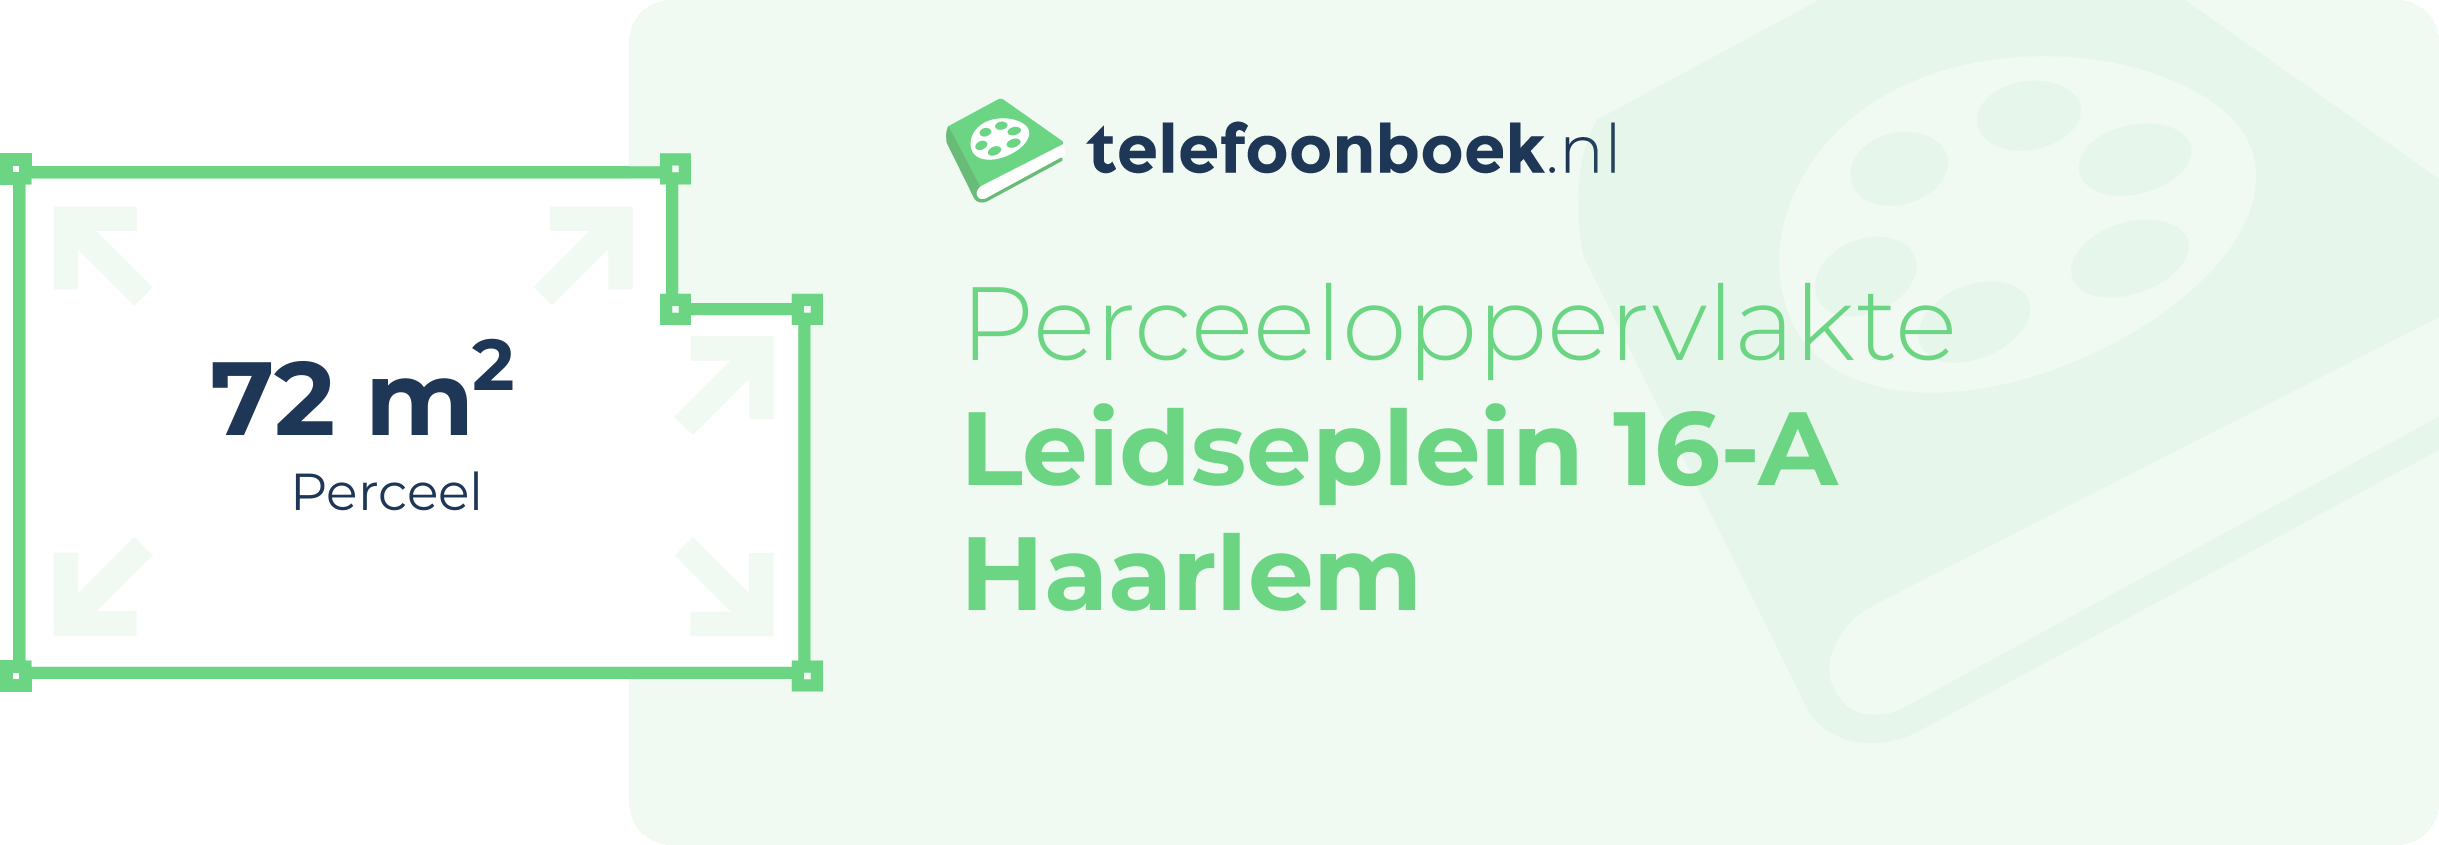 Perceeloppervlakte Leidseplein 16-A Haarlem